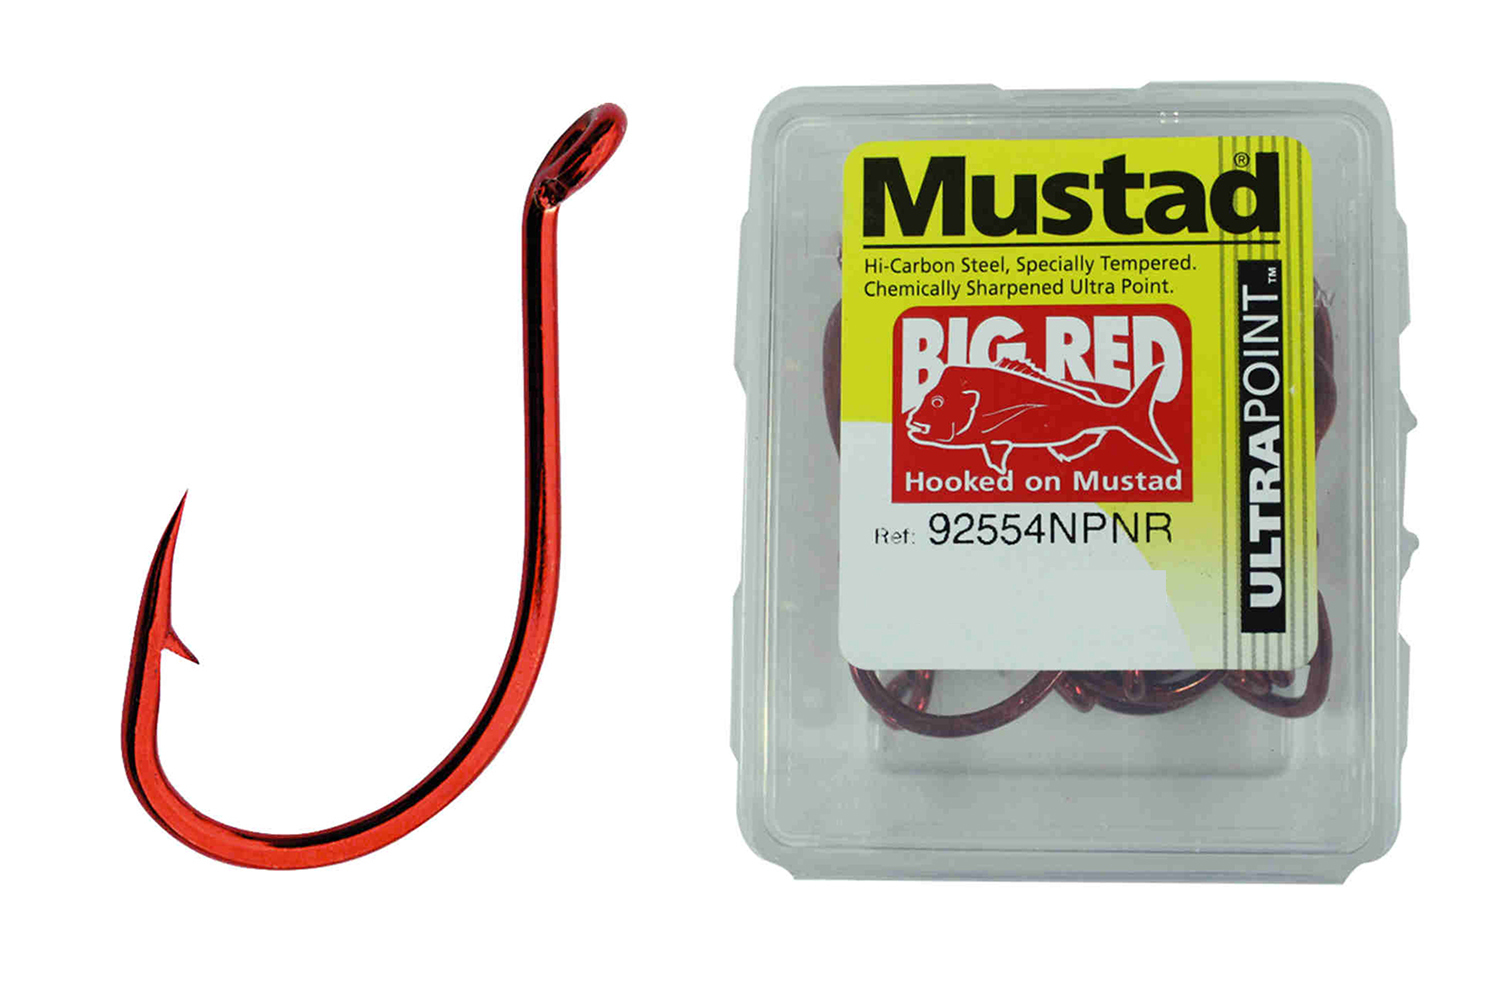 100 x Mustad 92554NPNR Big Red Chemically Sharpened Fishing Hooks - Size 2/0